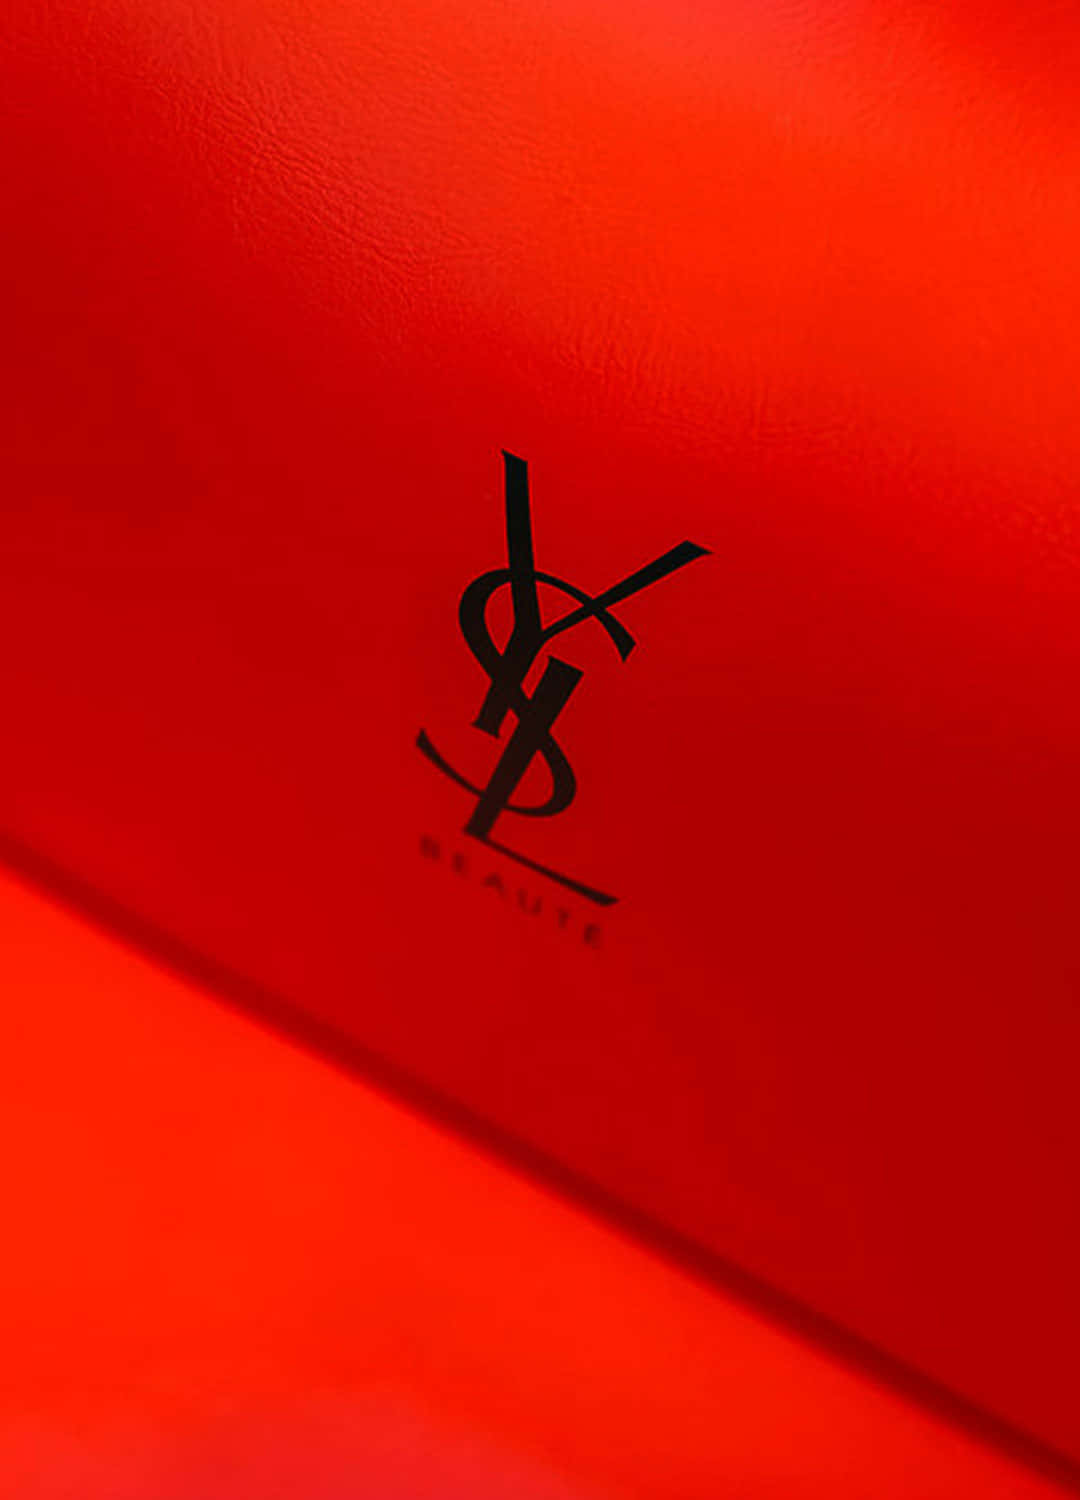 The iconic Yves Saint Laurent insignia, making fashion history